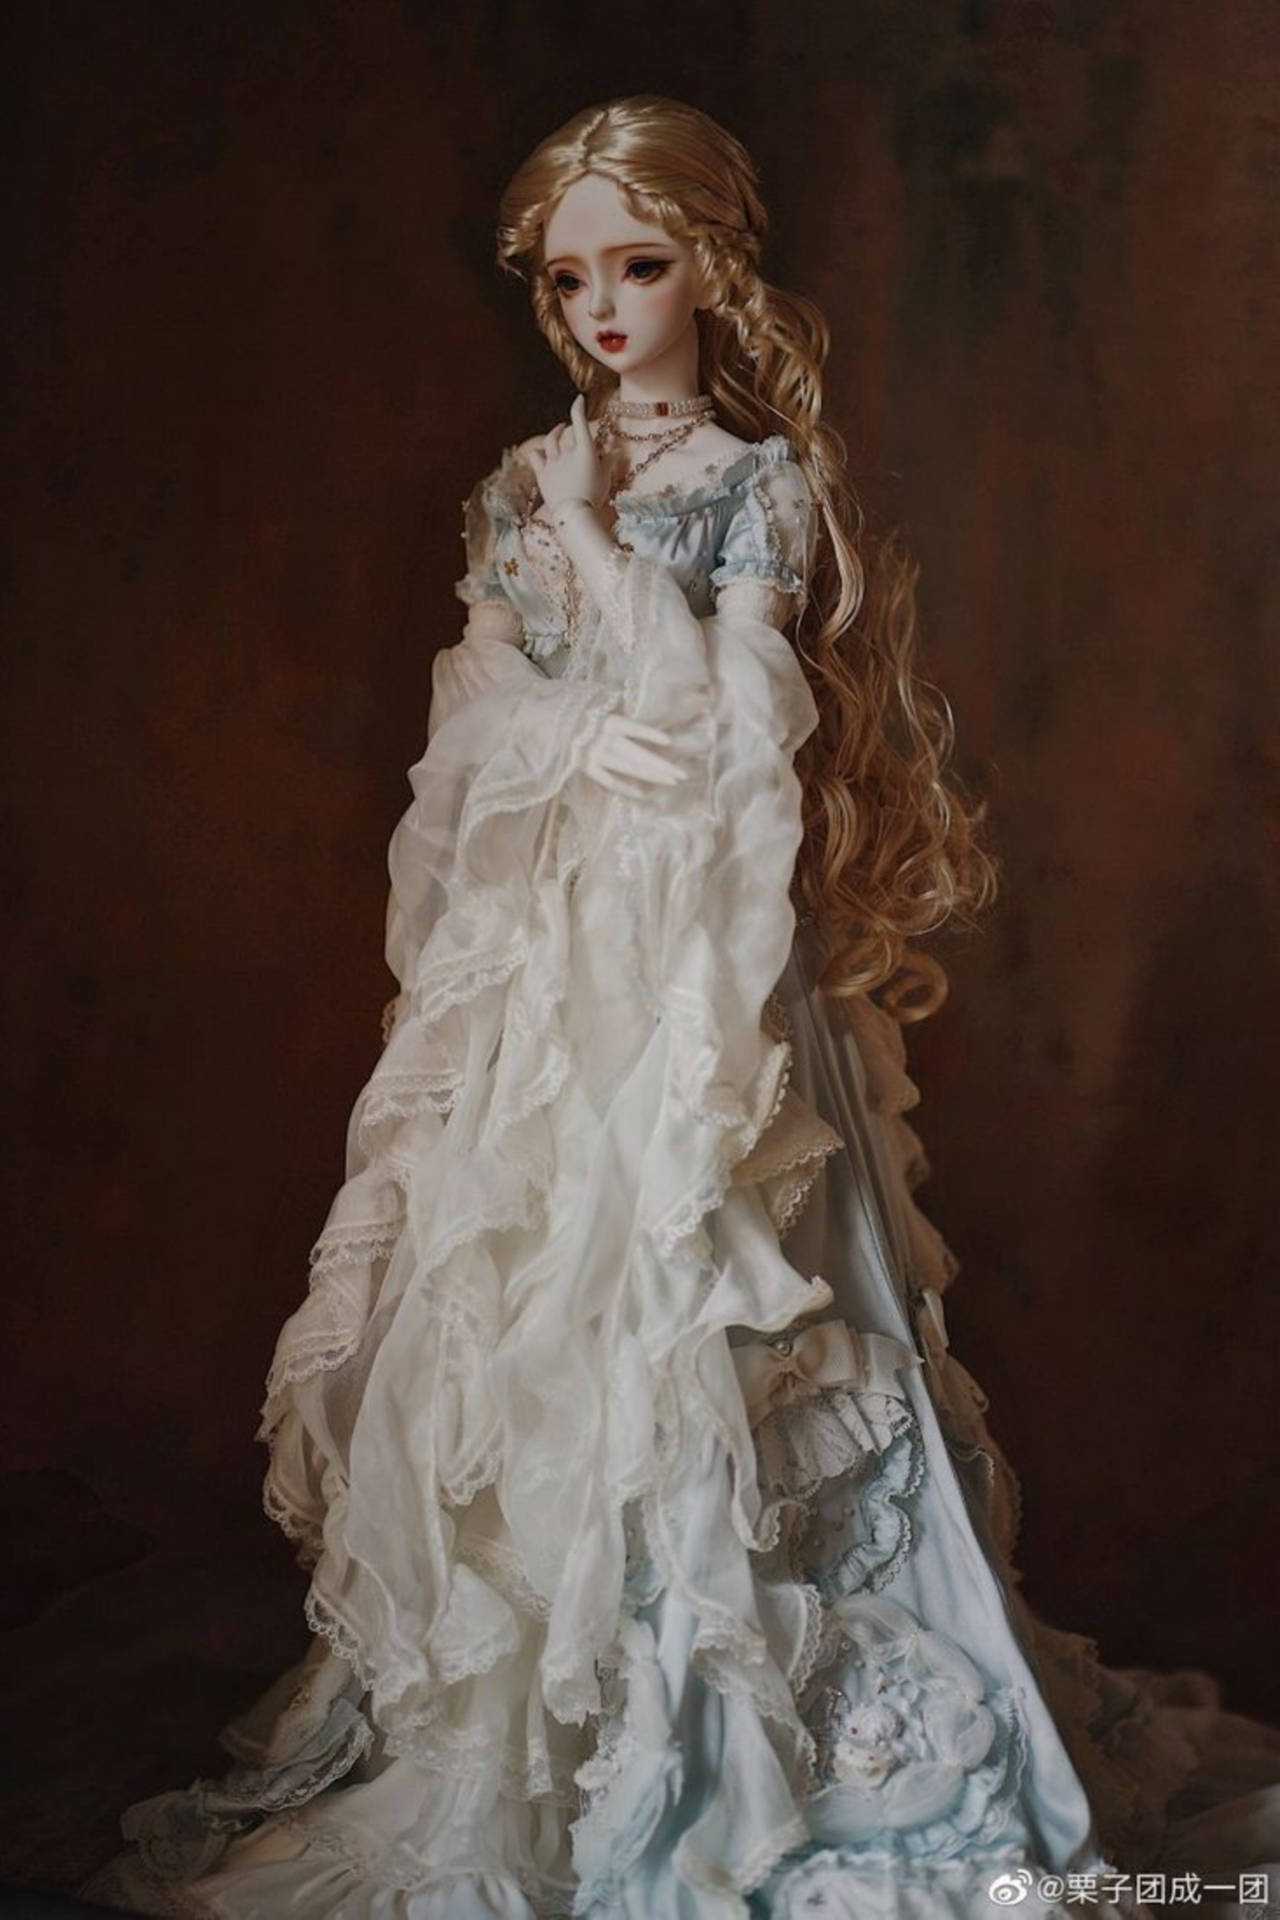 Graceful Barbie Doll Dressed in a Flowy Gown Wallpaper